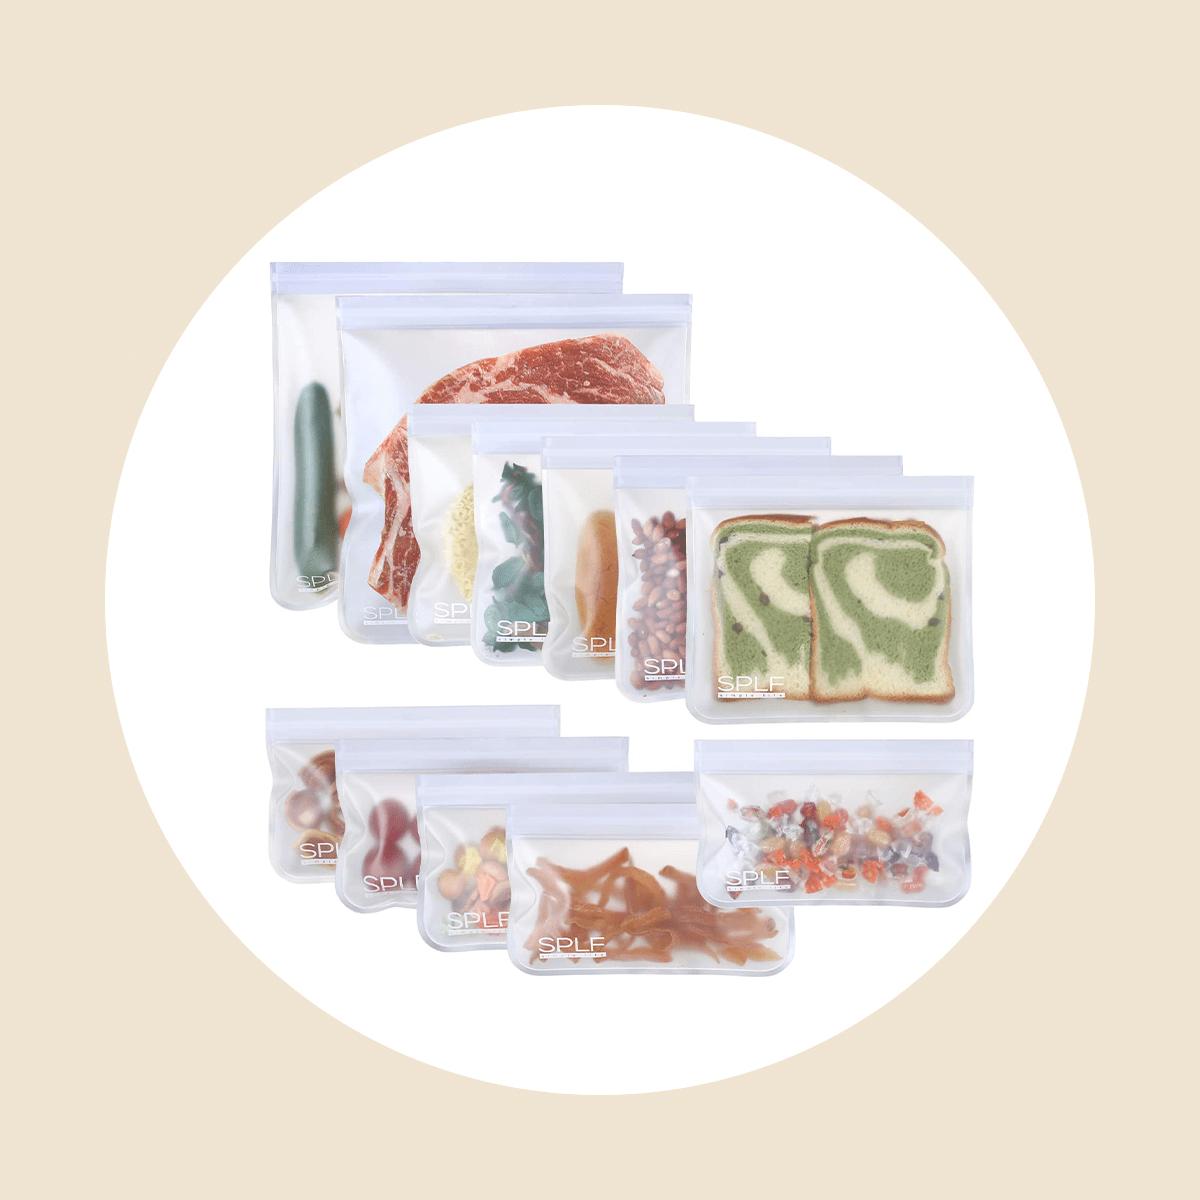 Qinline reusable food storage bags - 10 pack bpa free flat freezer bags(2 reusable  gallon bags + 4 leakproof reusable sandwich bags +